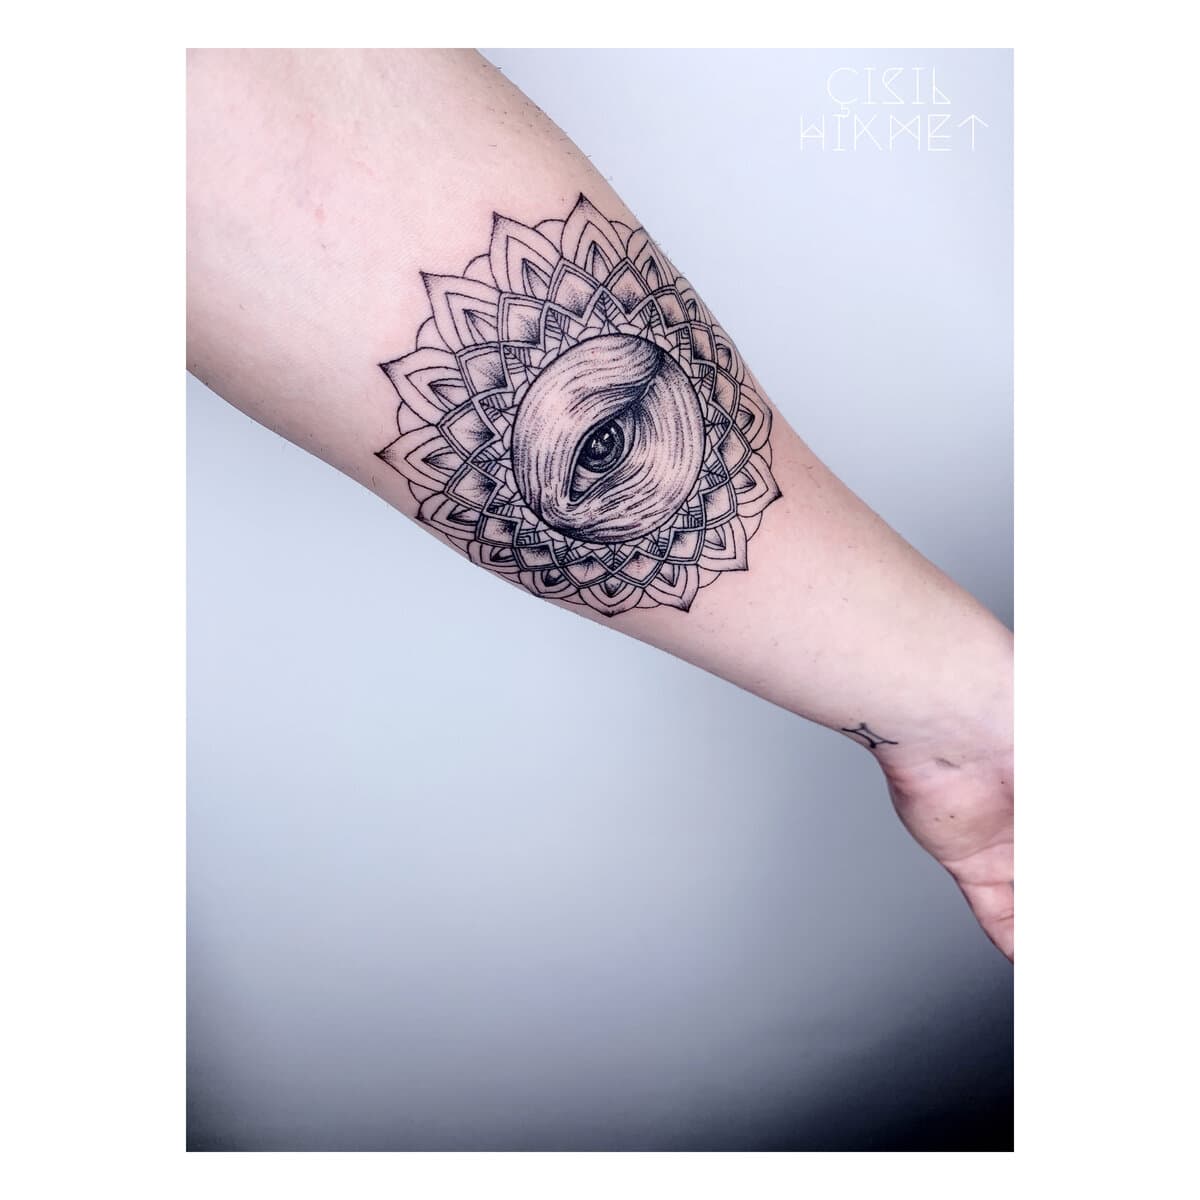 Ã§isil-hikmet-tattoo-artist-ornamental-eye